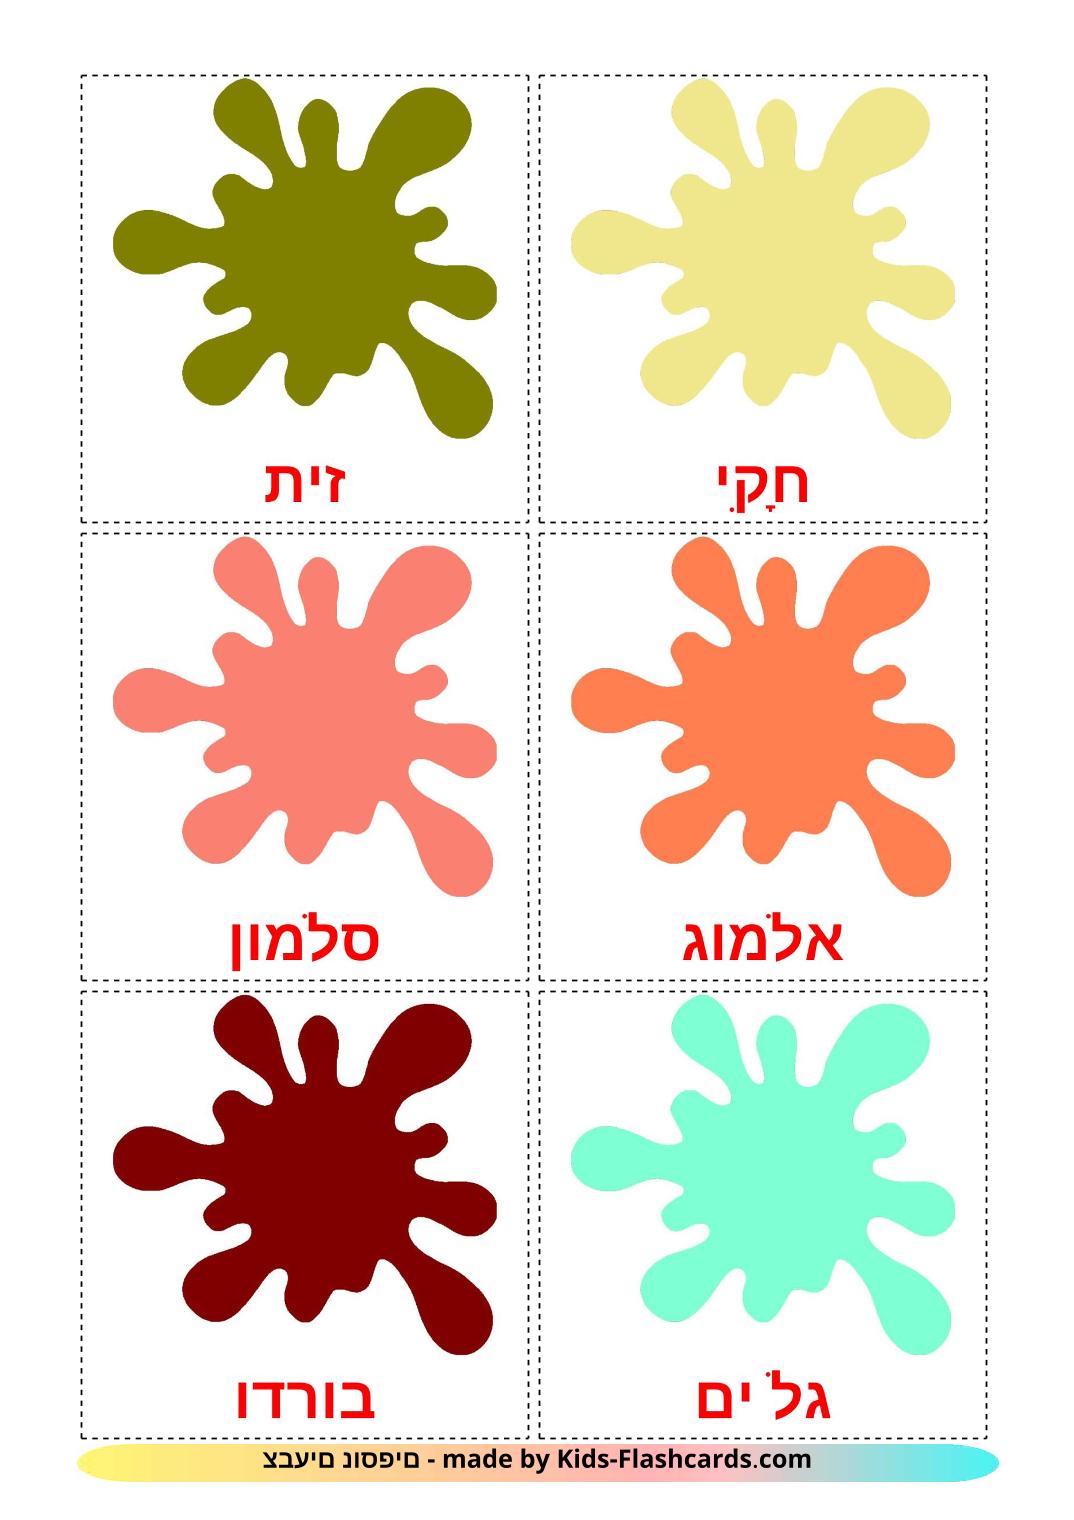 Colori secondari - 20 flashcards ebraico stampabili gratuitamente